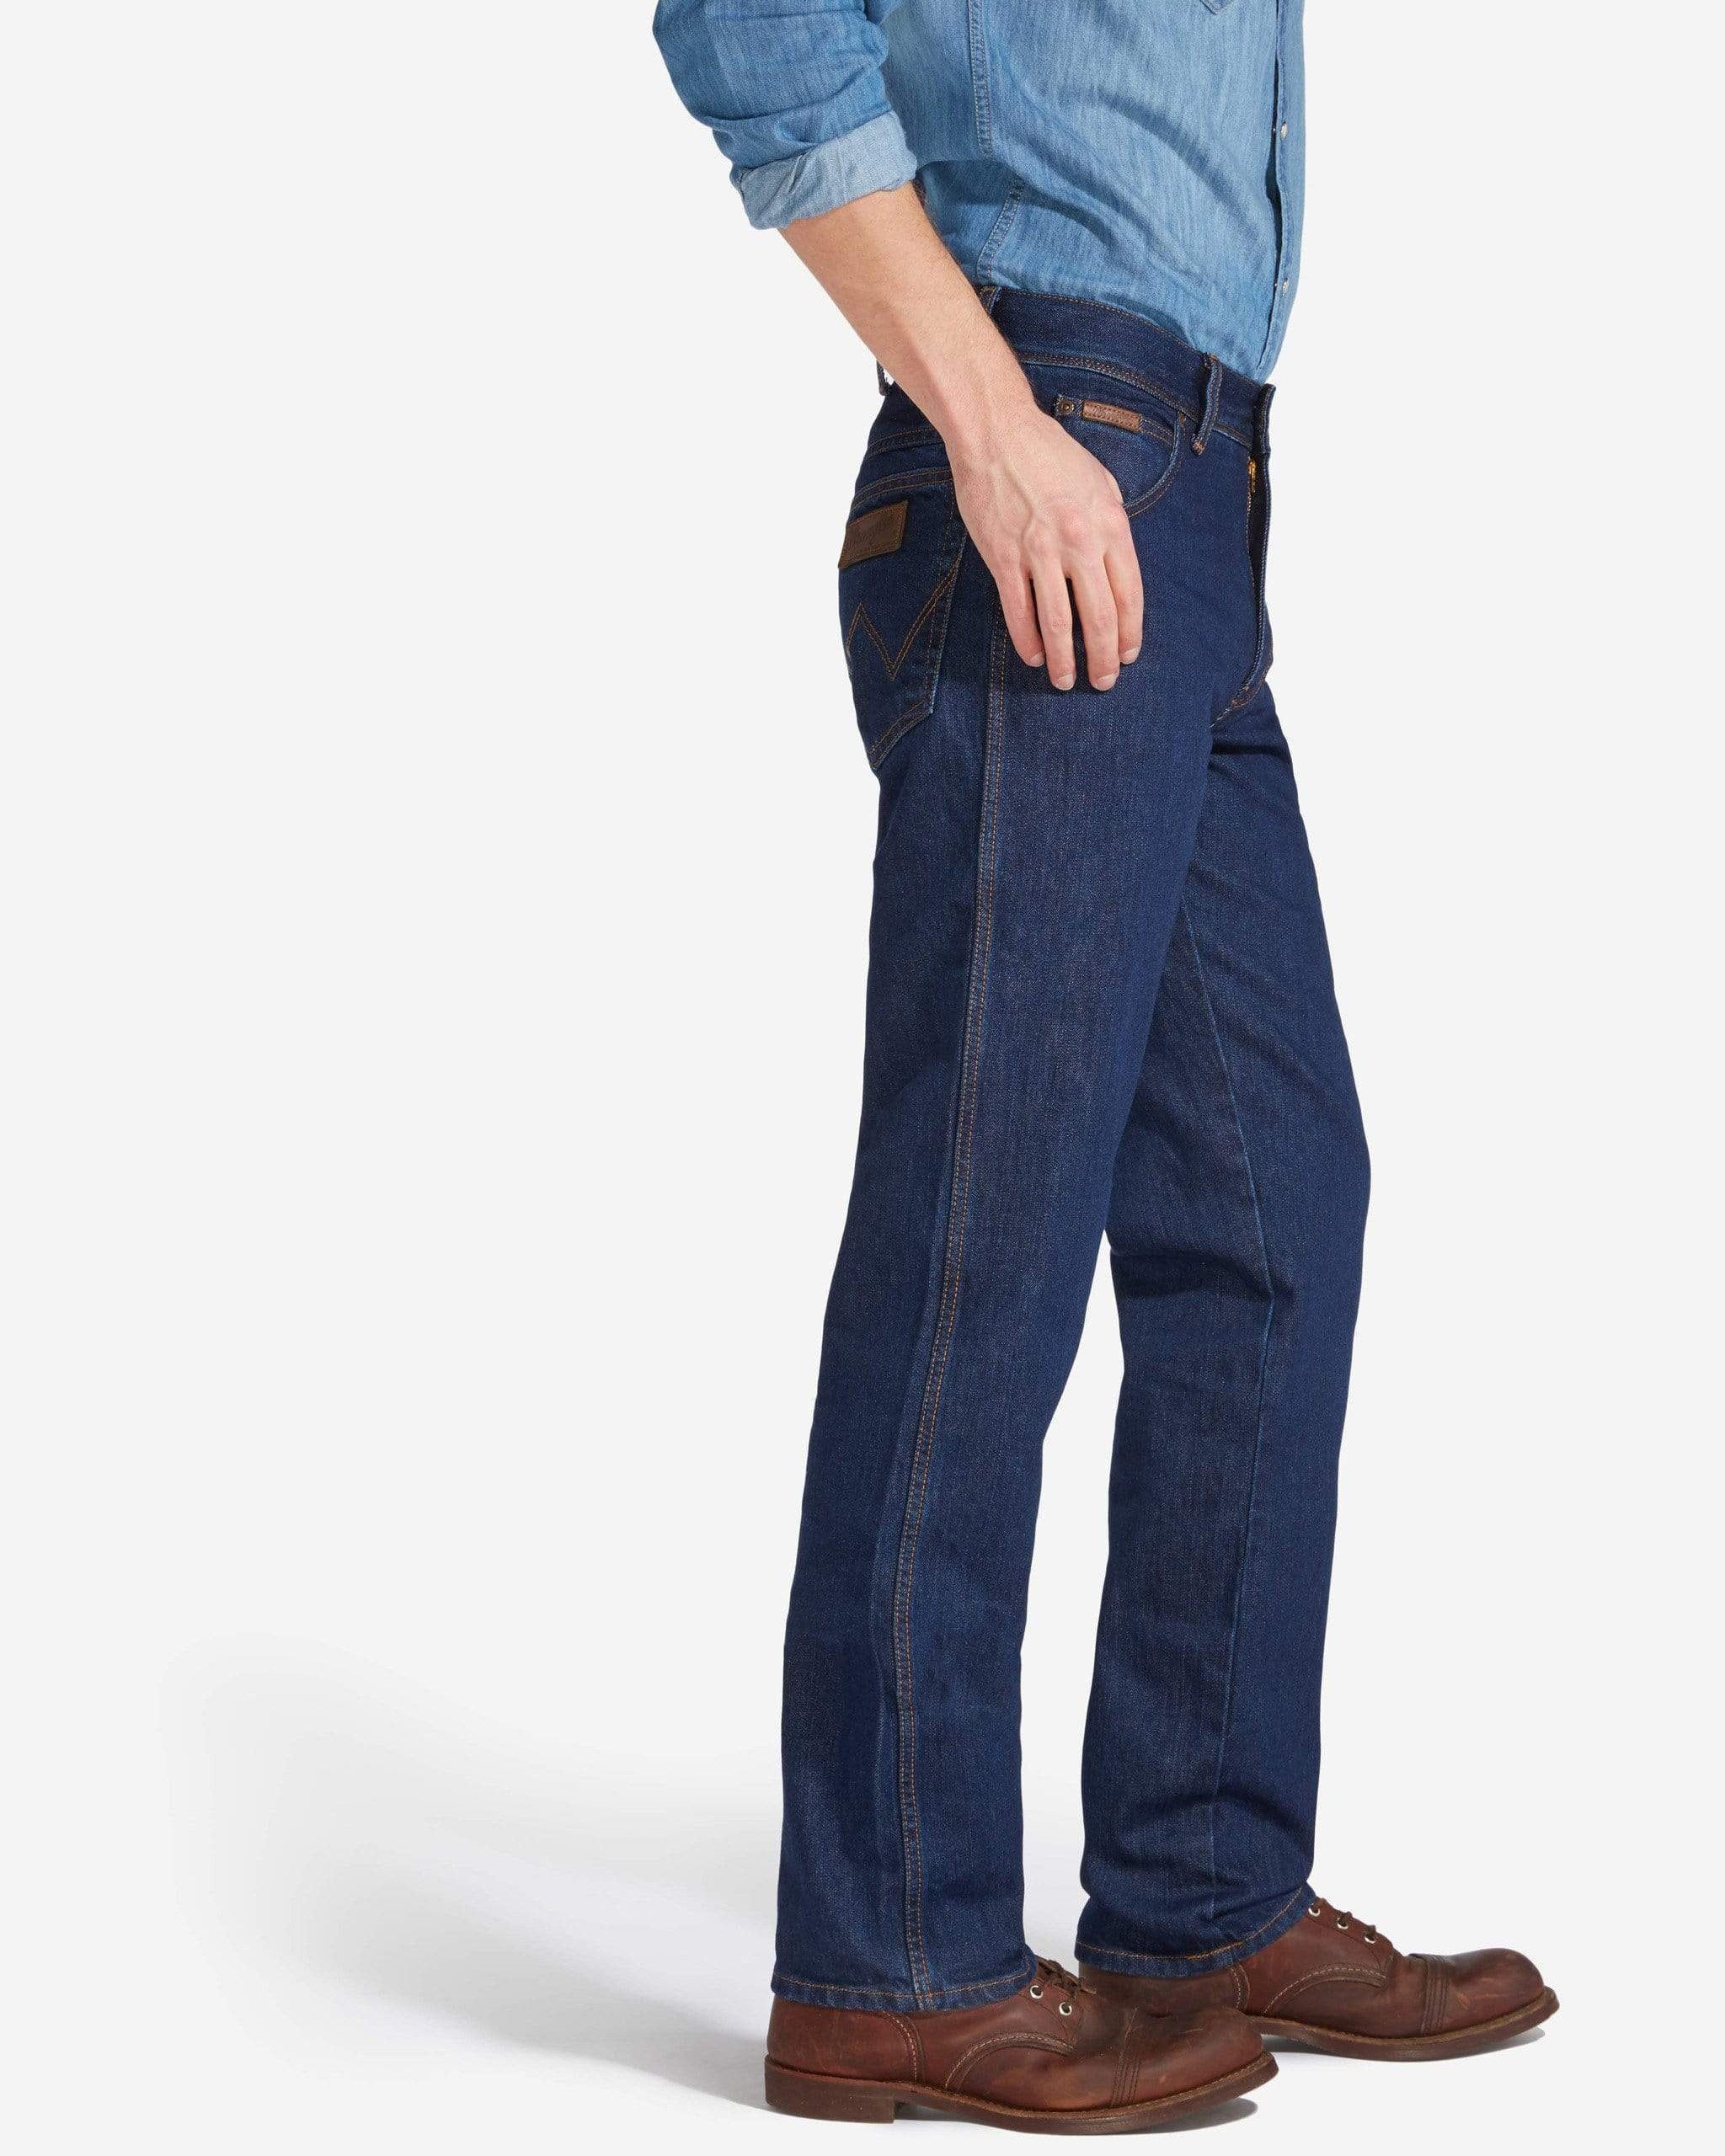 Wrangler Texas Original Fit Mens Jeans - Darkstone | JEANSTORE